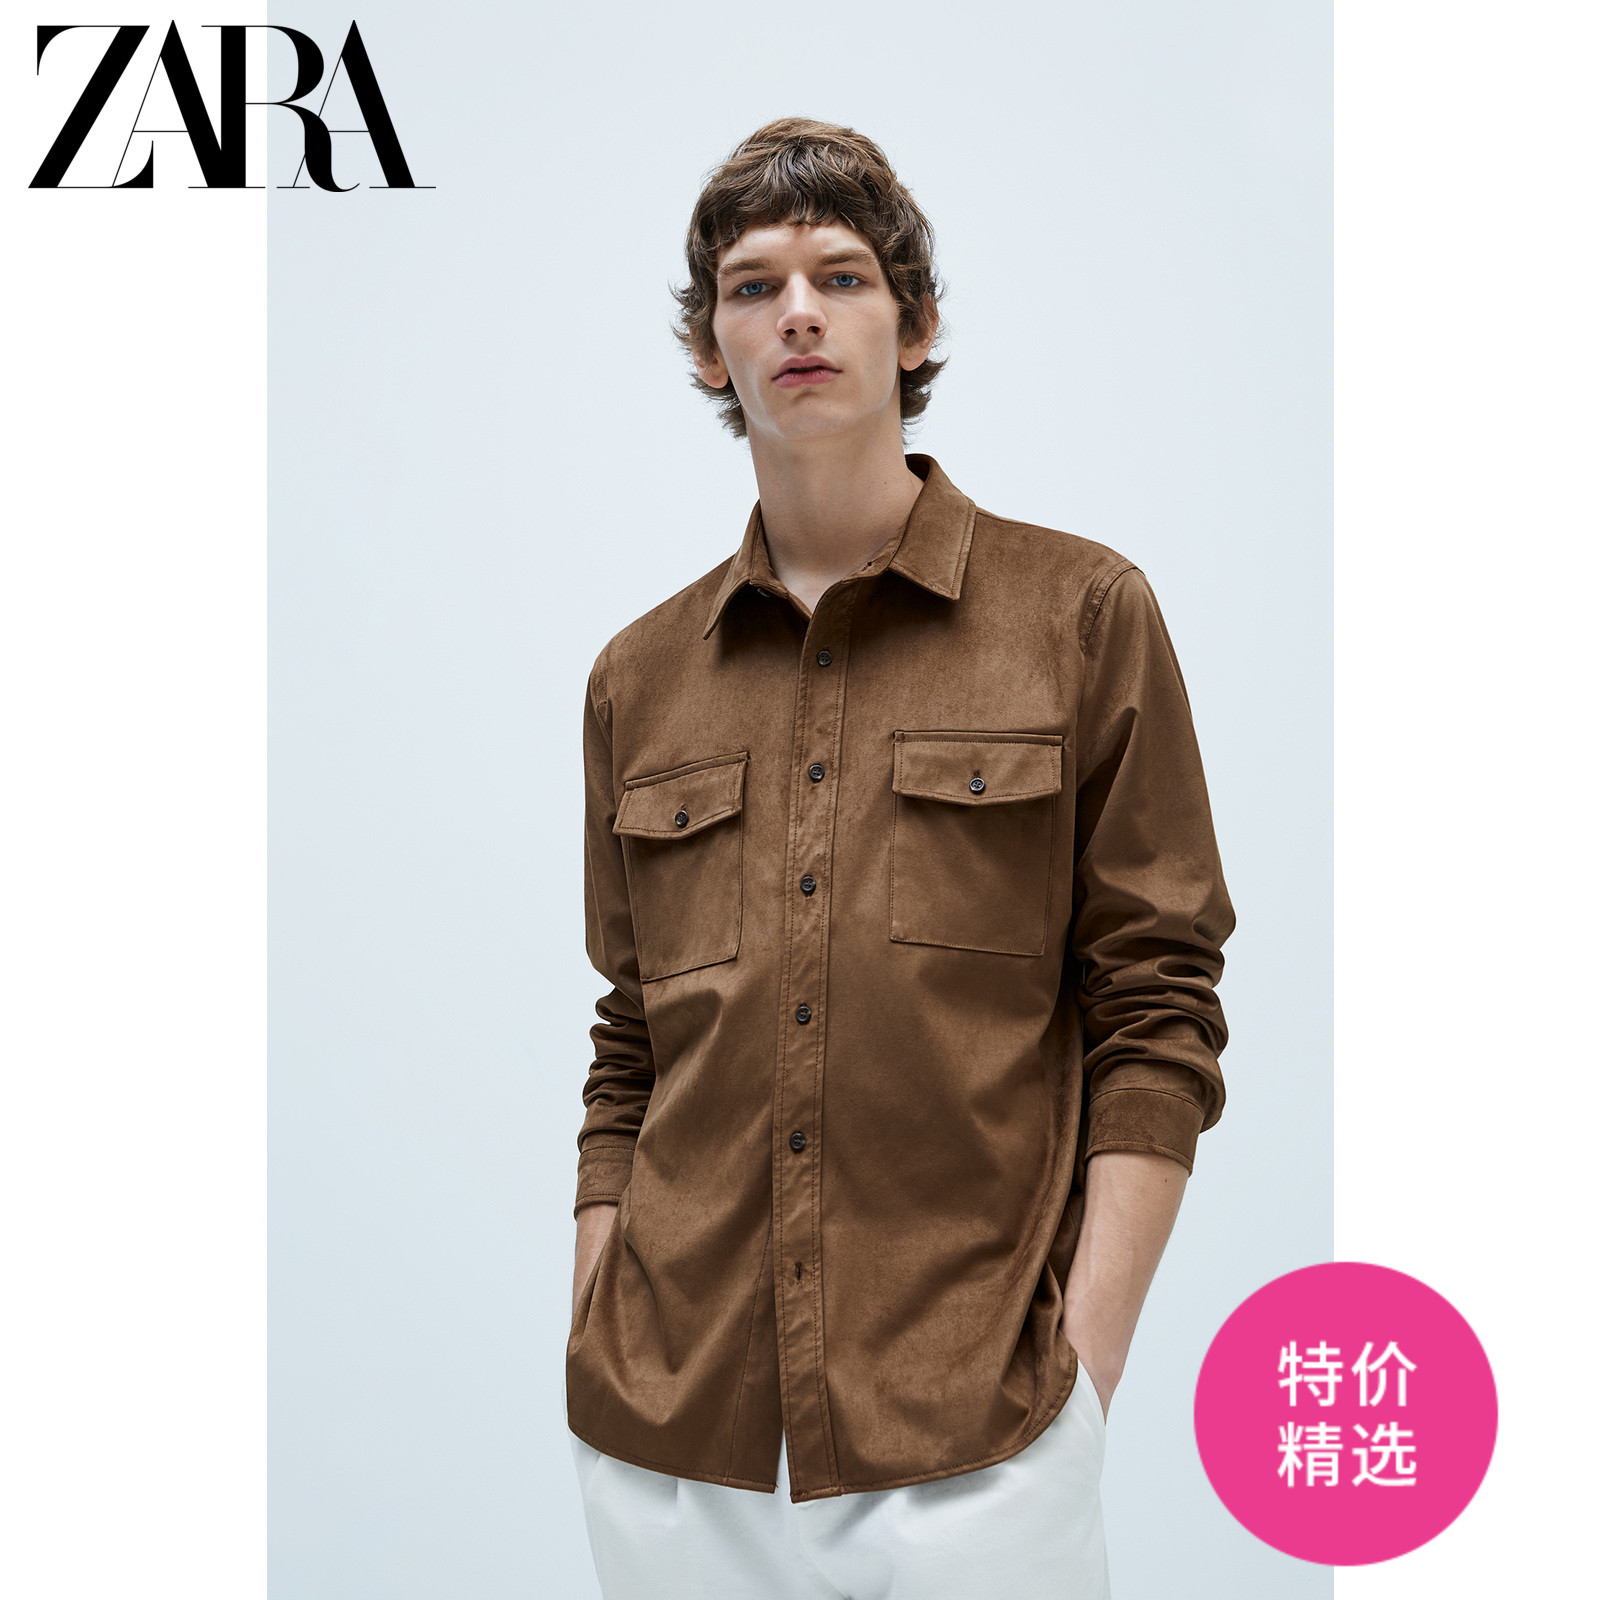 ZARA 新款 男装 休闲绒面质感效果衬衣衬衫外套 06318301707 L (180/100A) 棕褐色